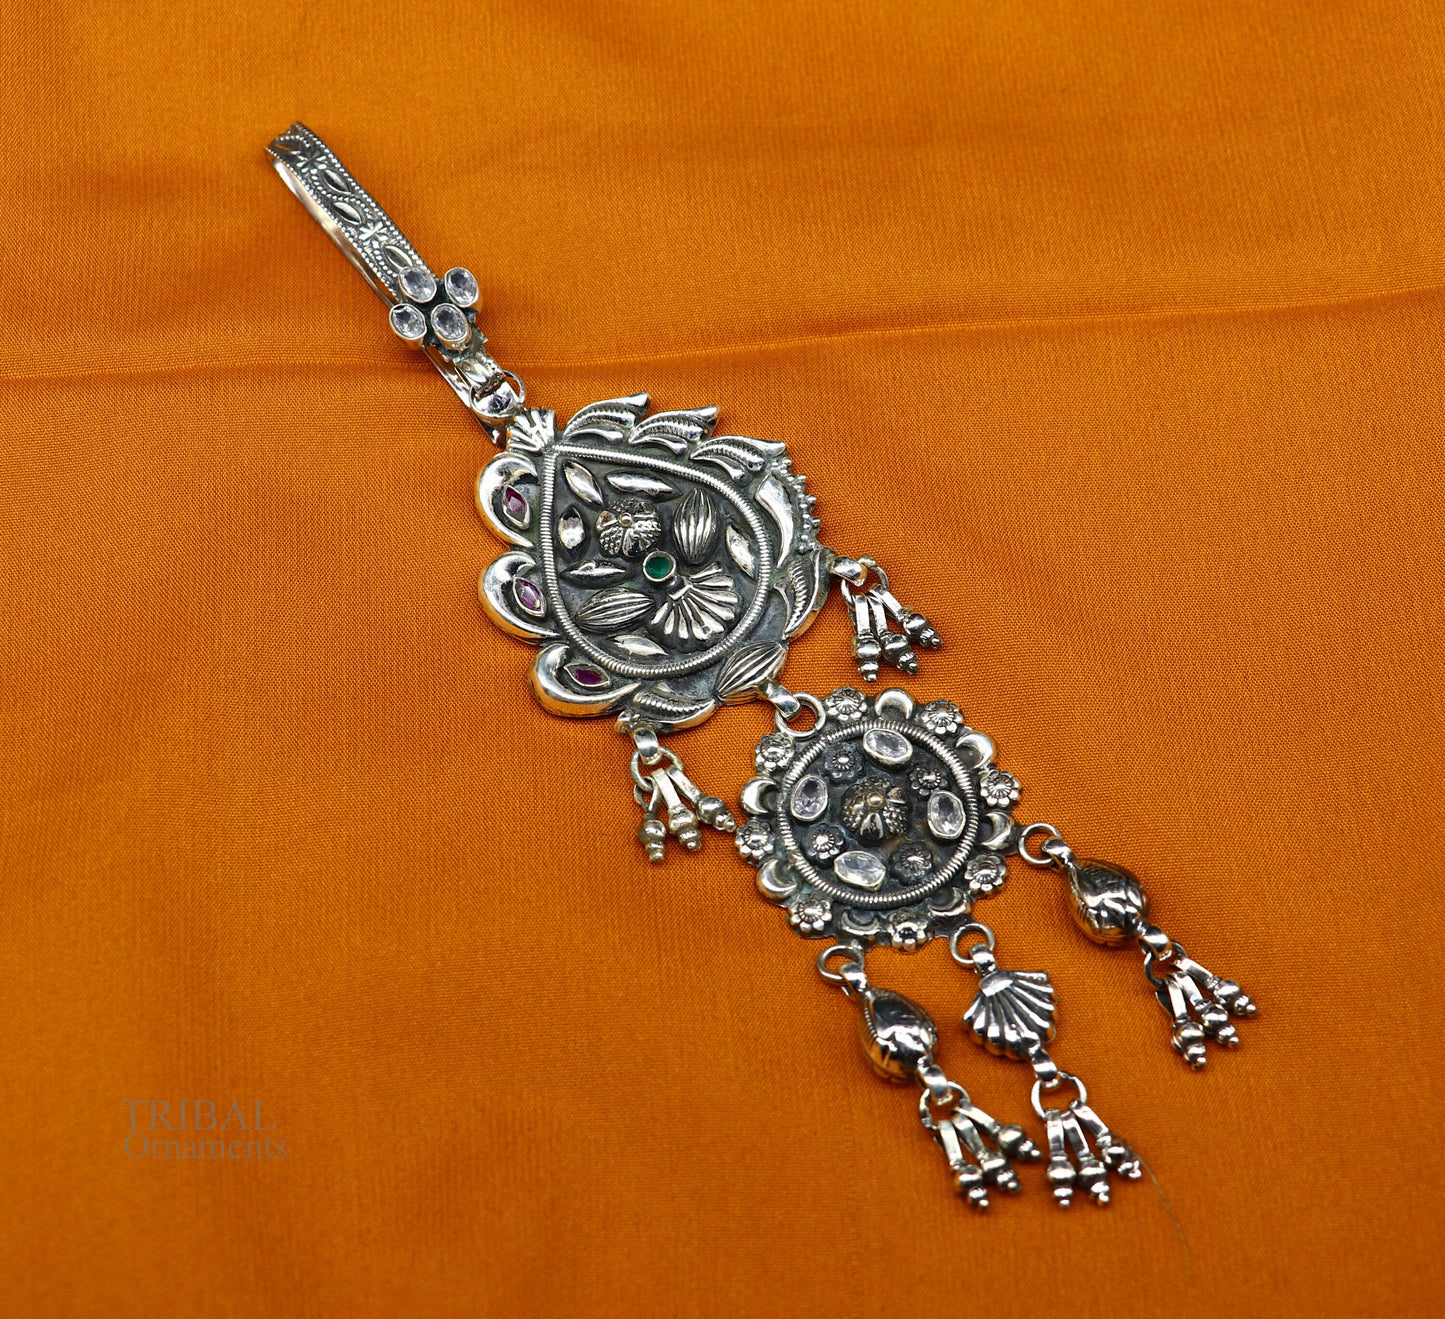 Ethnic wedding sari waist jewelry, pure 925 sterling silver vintage stylish belly dance sari chhalla btooches, waist belly jewelry skey10 - TRIBAL ORNAMENTS